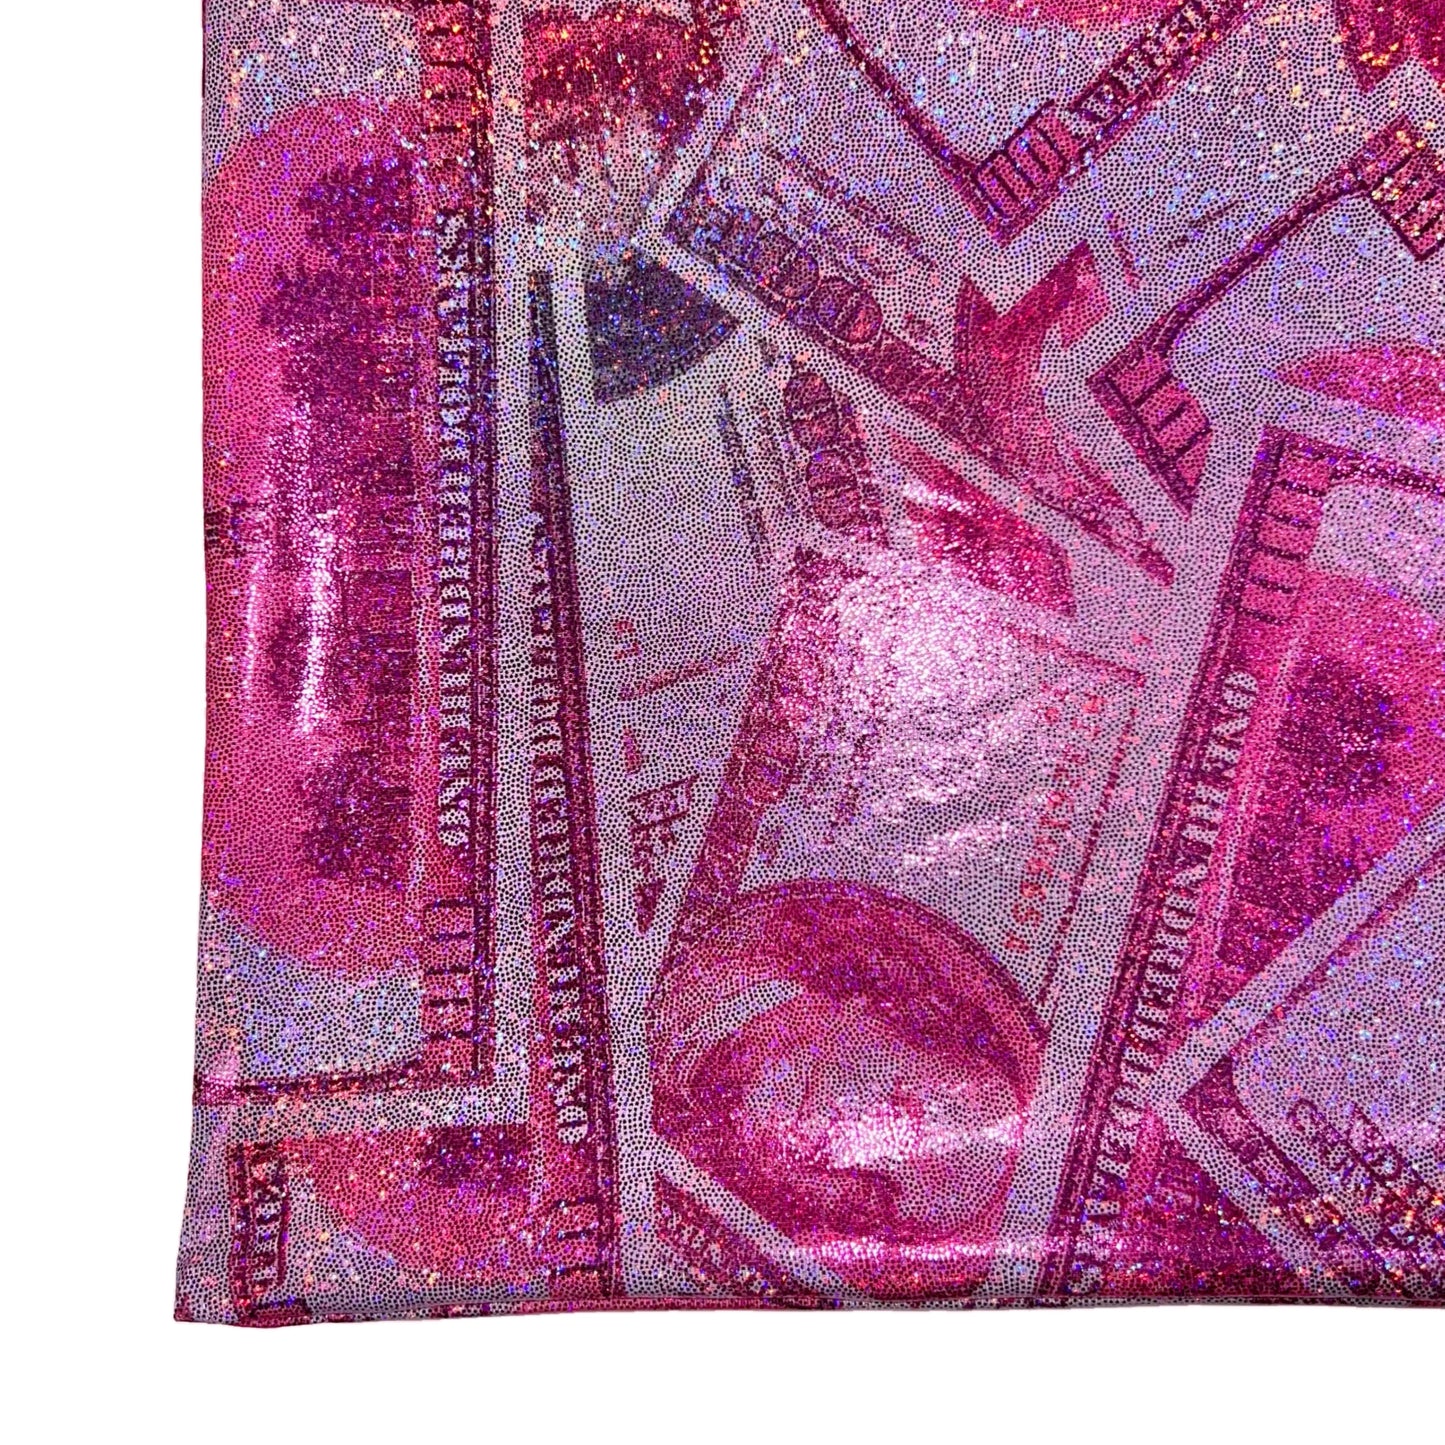 ACE Money Bag: HU$TLER Pink Sparkly Money